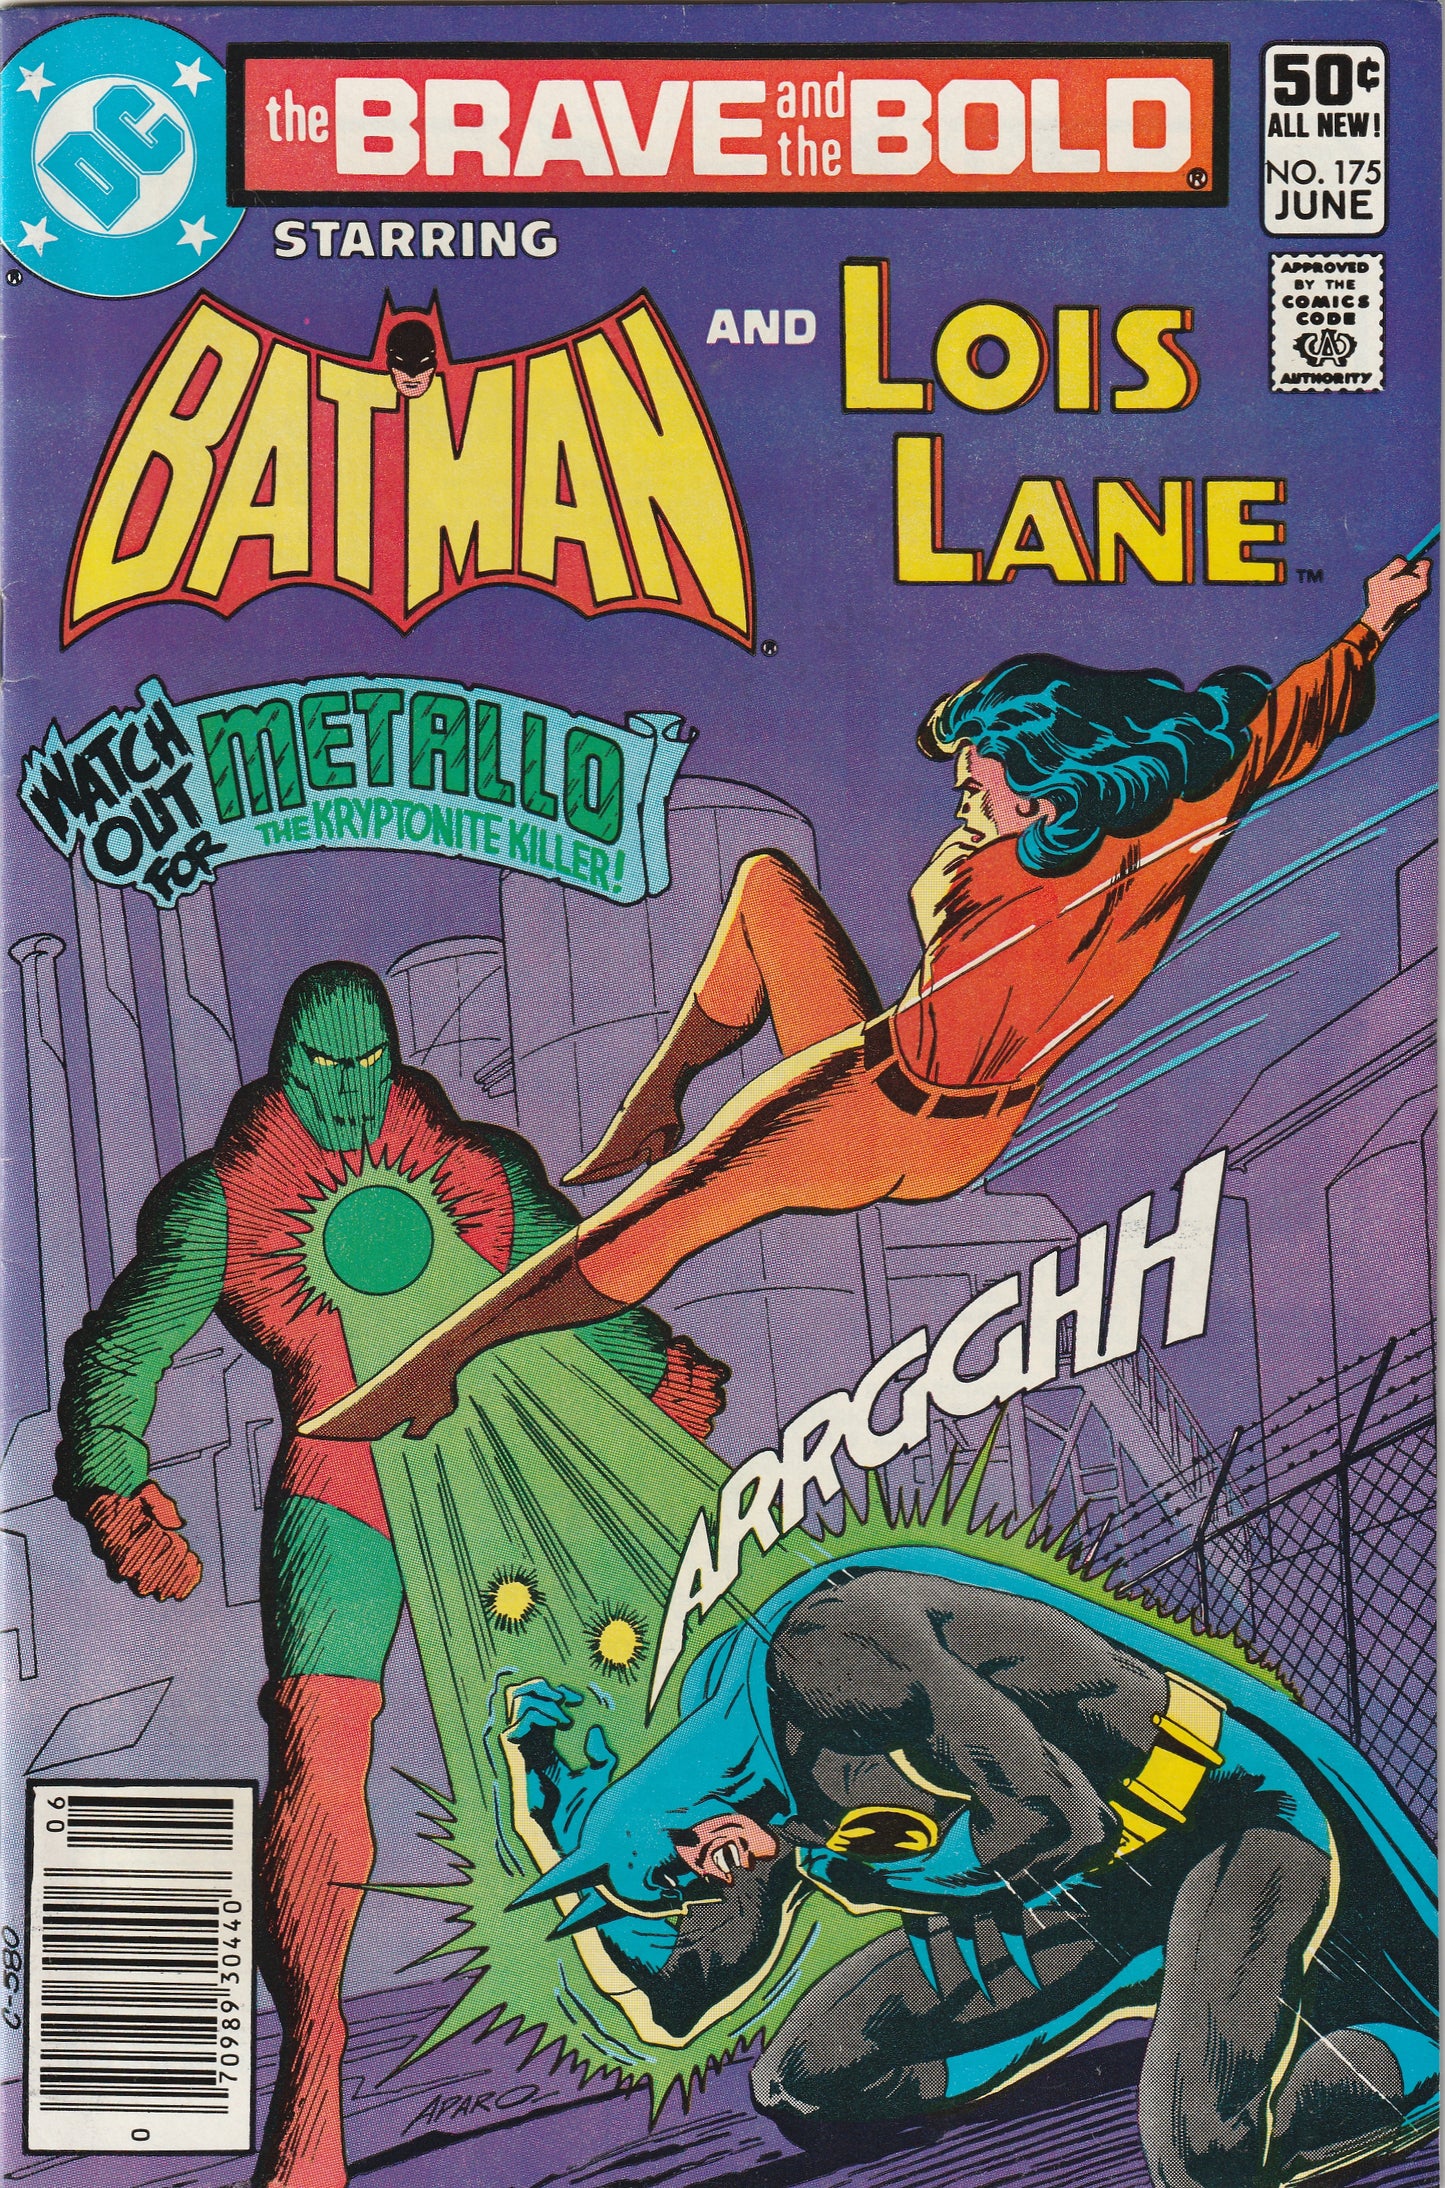 Brave and the Bold #175 (1981) - Batman & Lois Lane